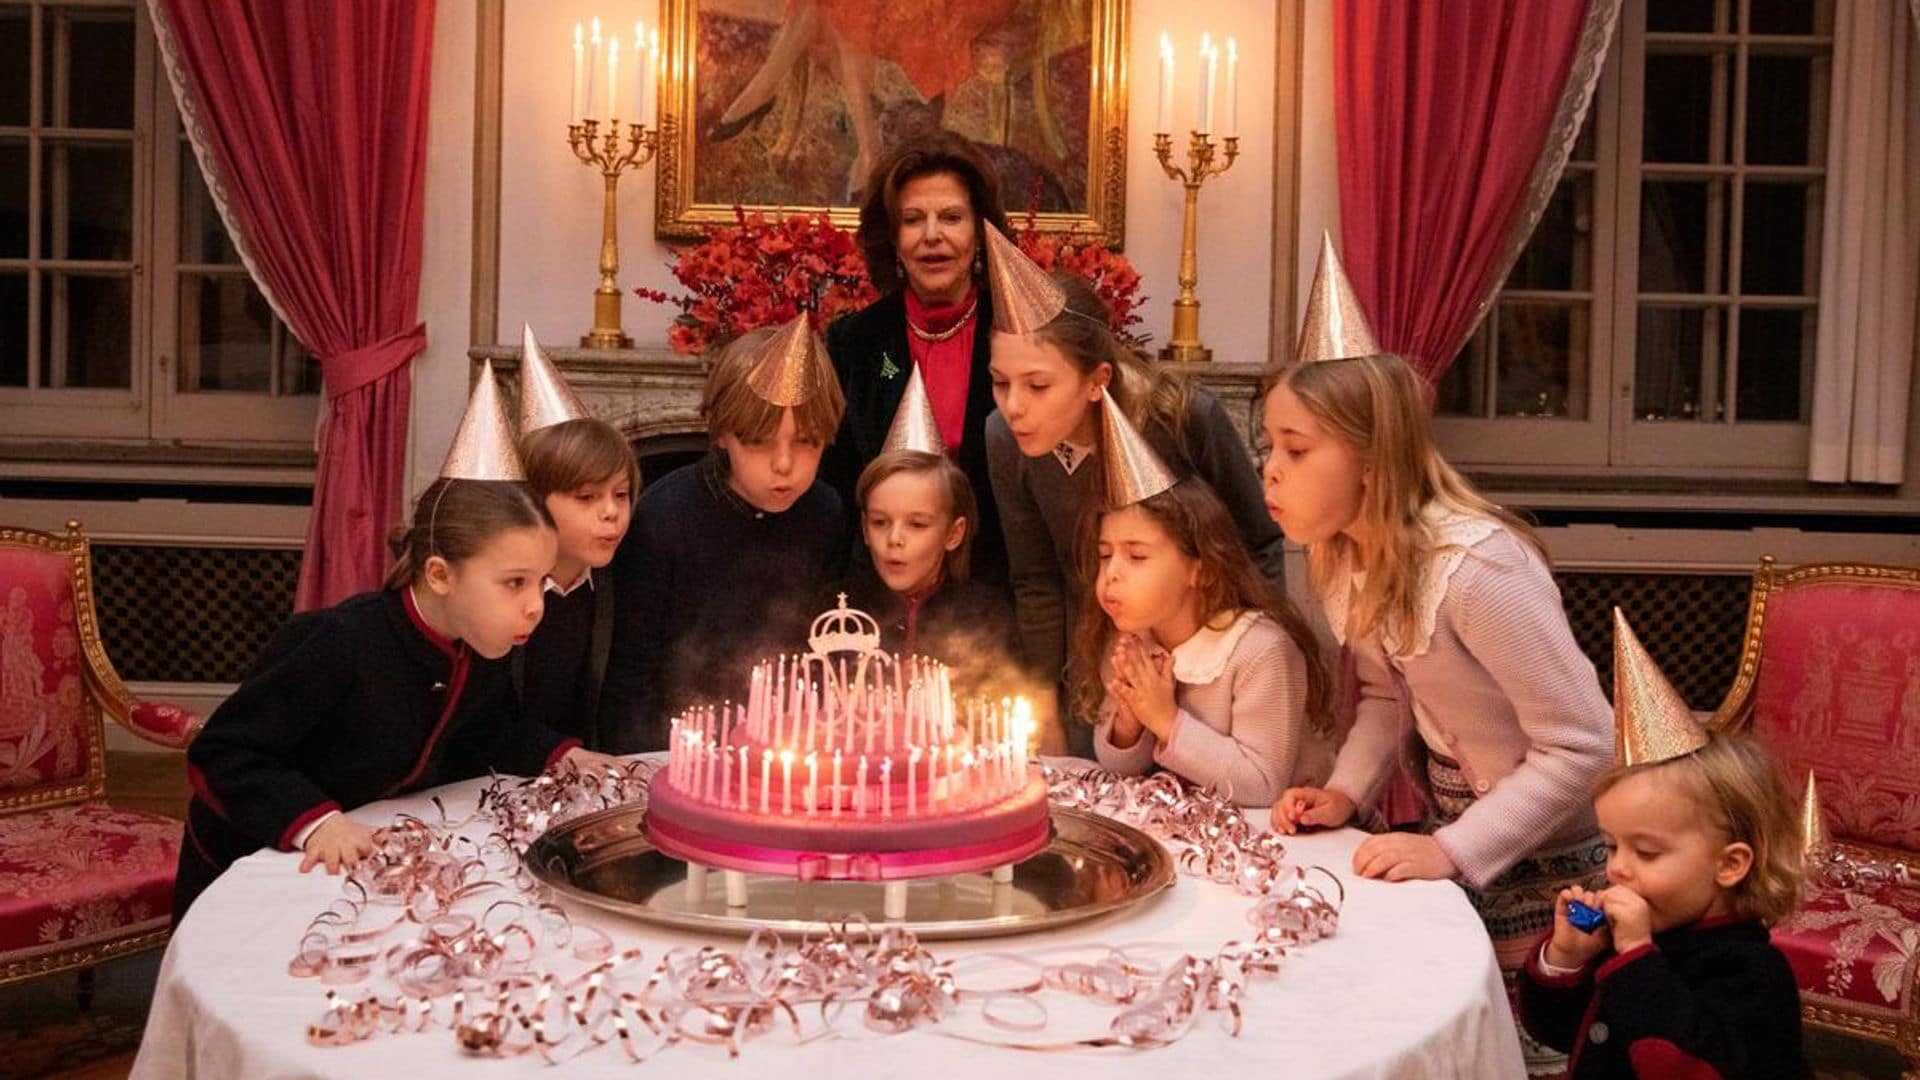 Royal’s adorable grandchildren surprise her ahead of birthday